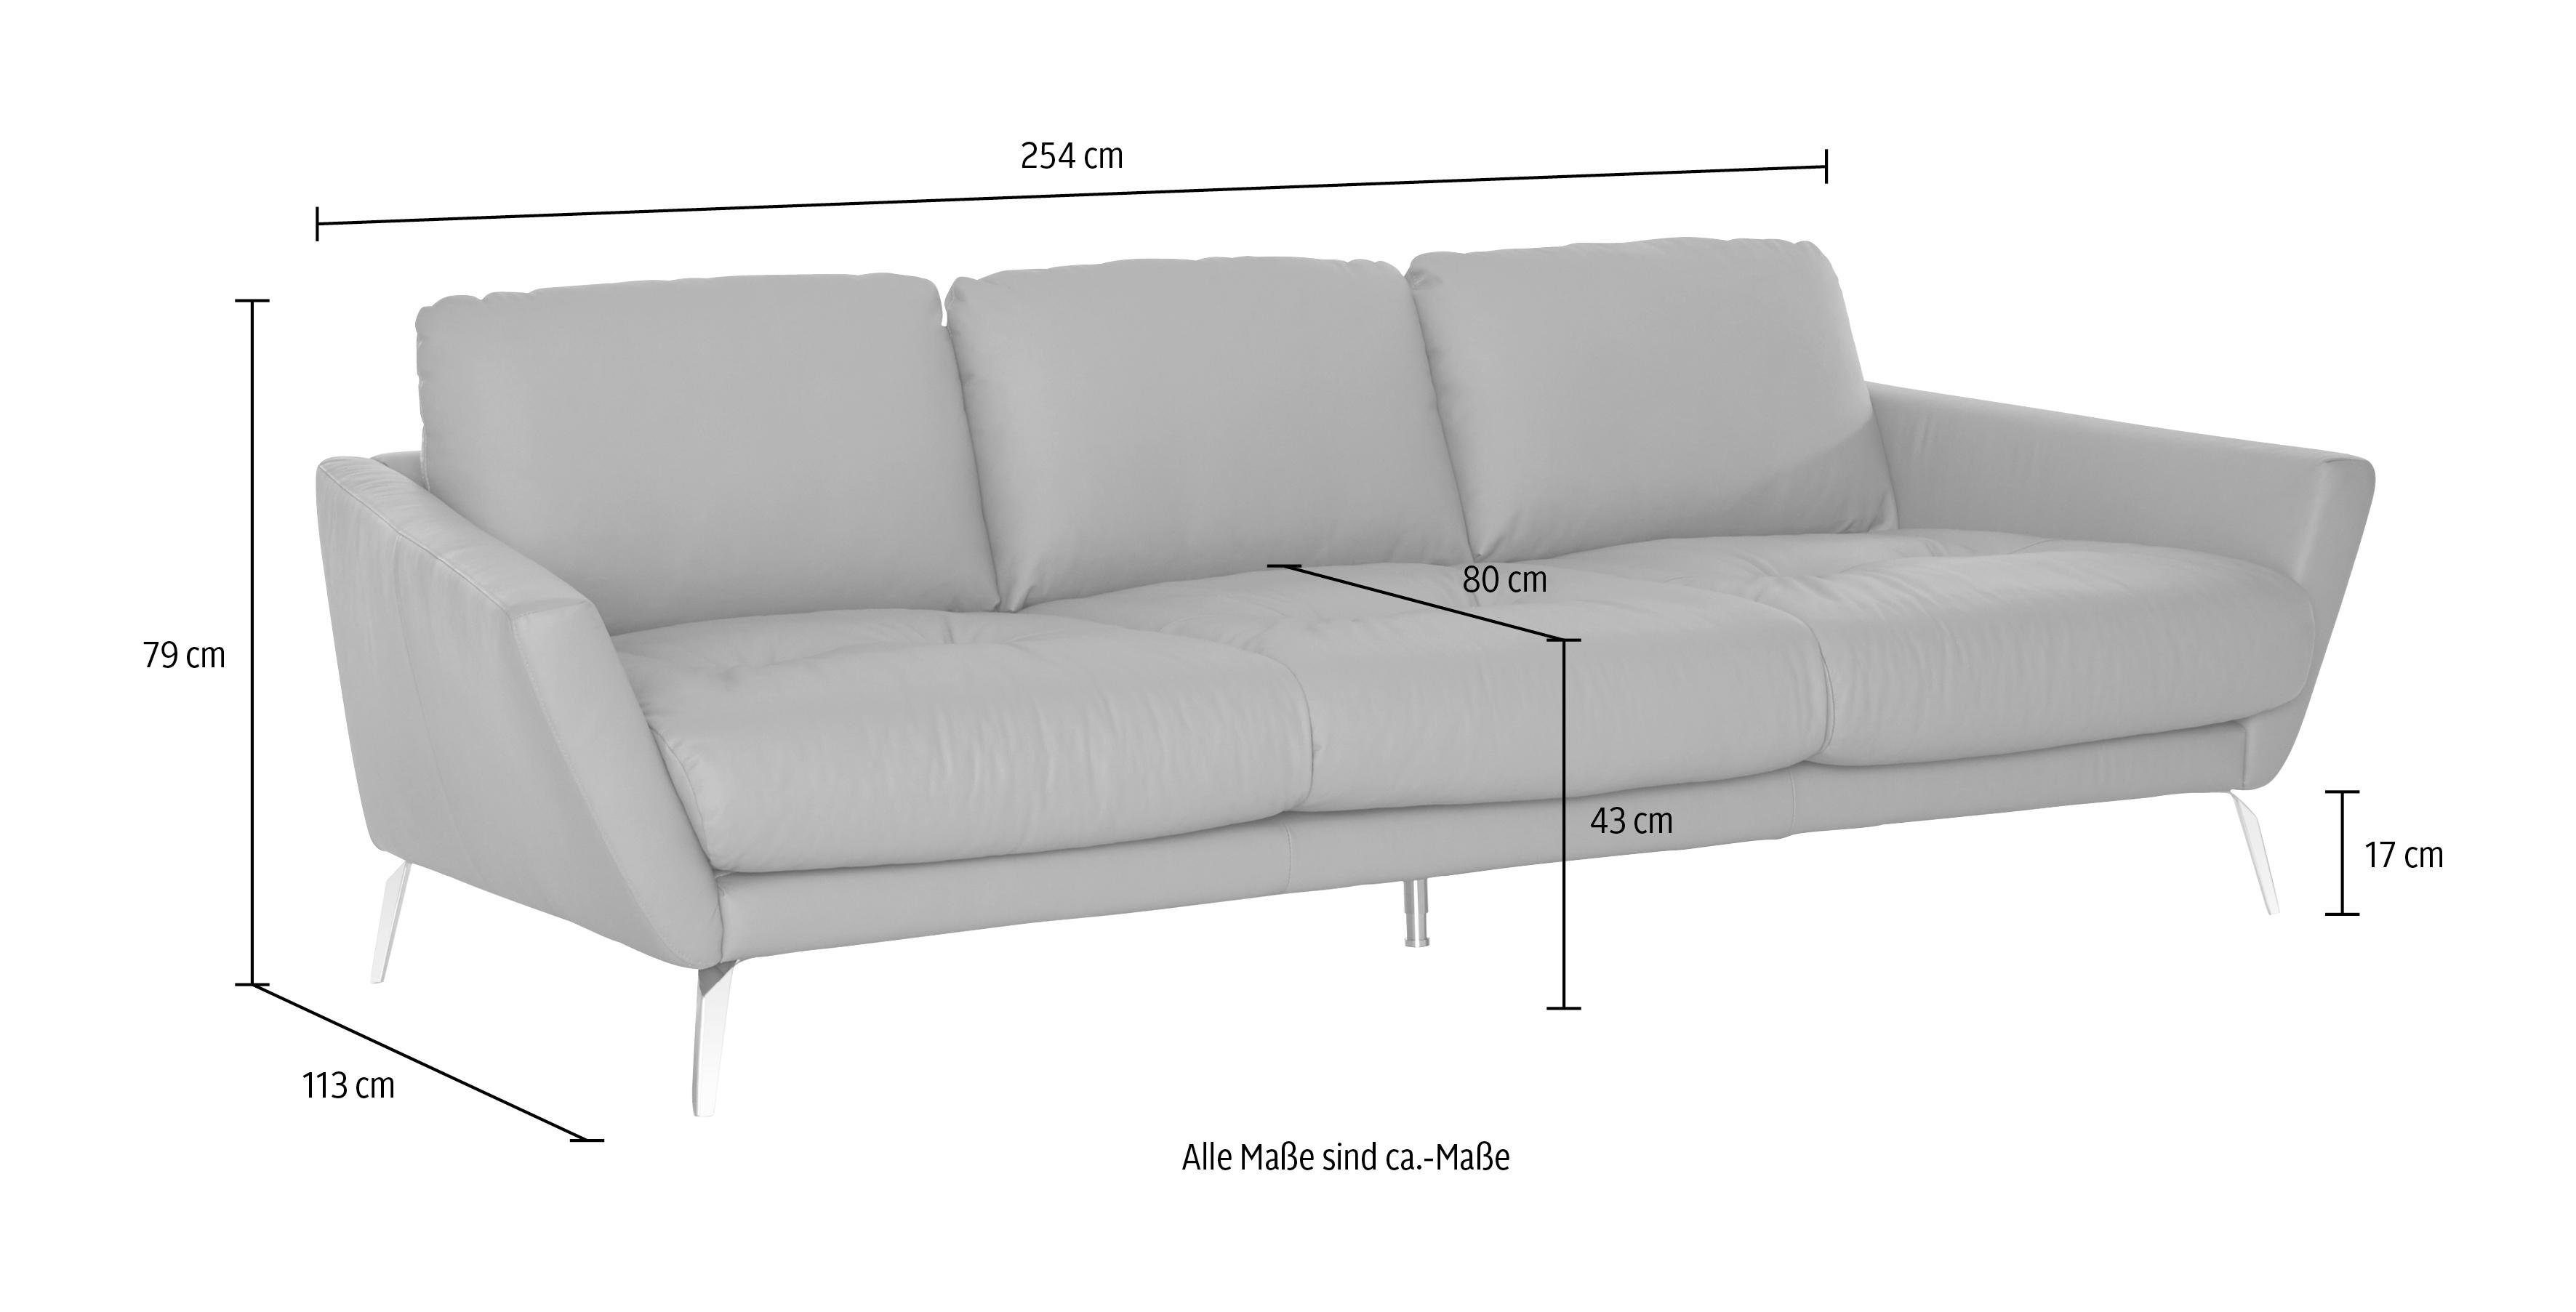 Big-Sofa softy, Sitz, Heftung Chrom glänzend im Füße W.SCHILLIG mit dekorativer